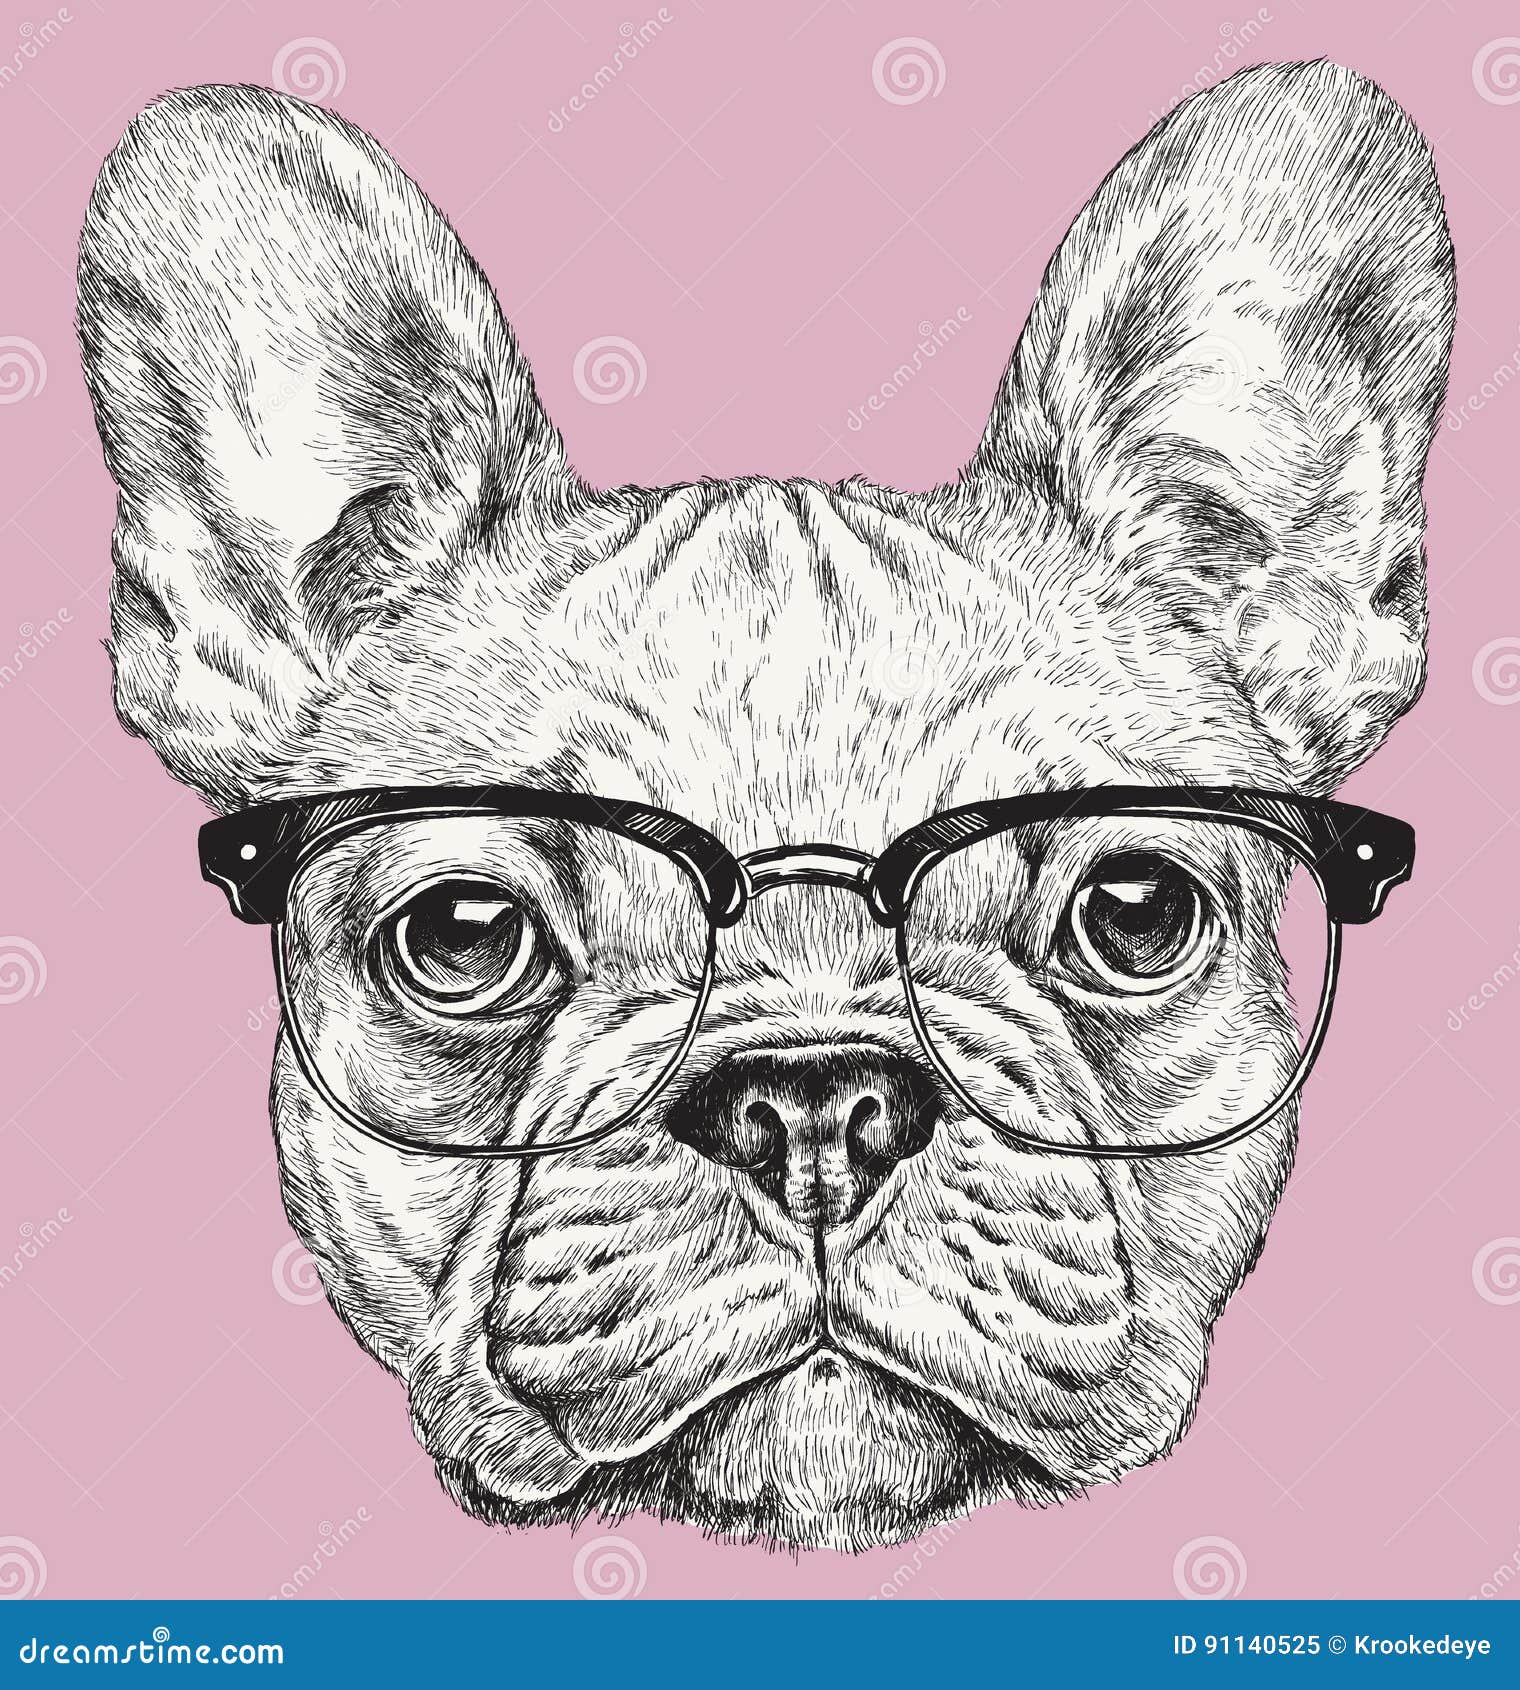 hipster geek french bulldog  